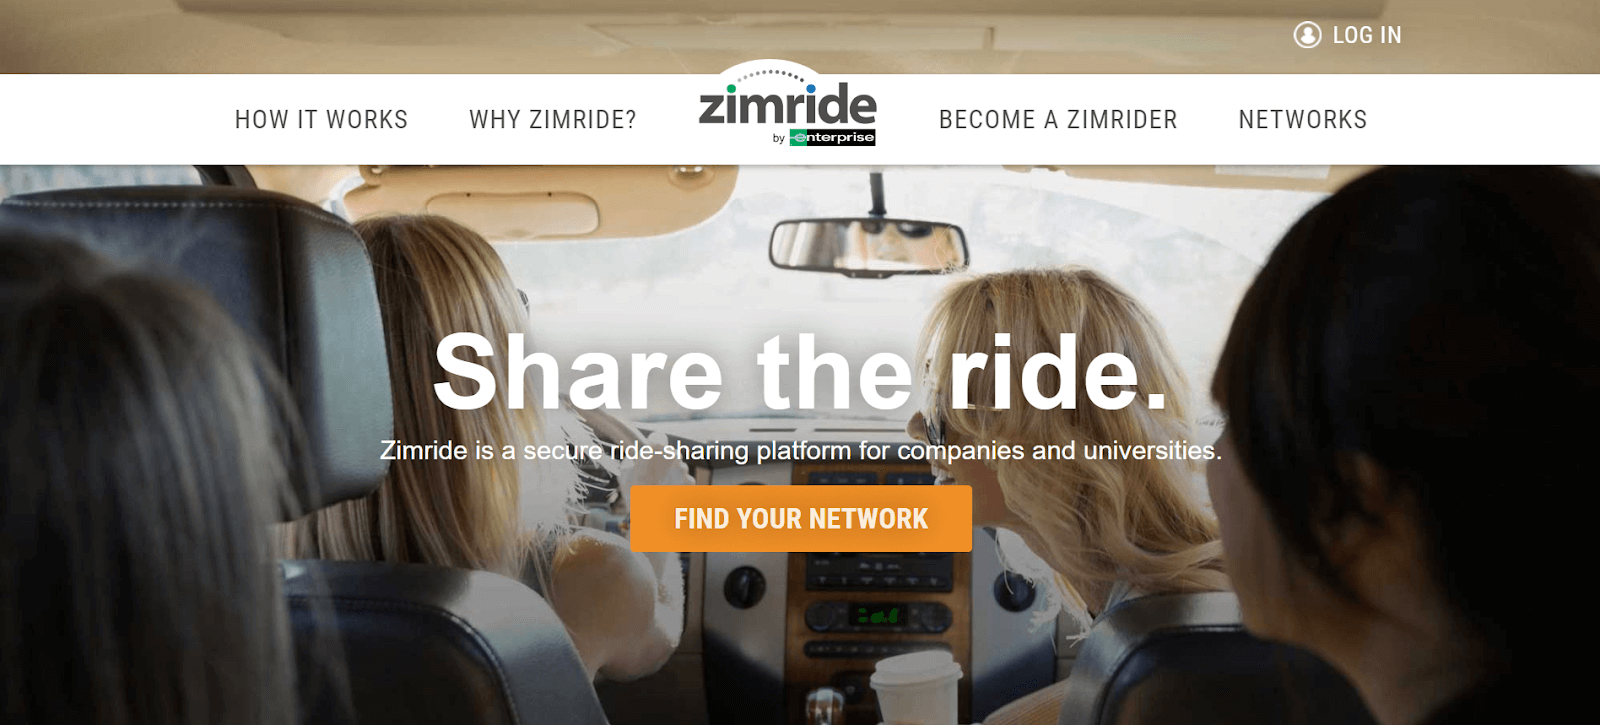 Zimride carpool app homepage screenshot